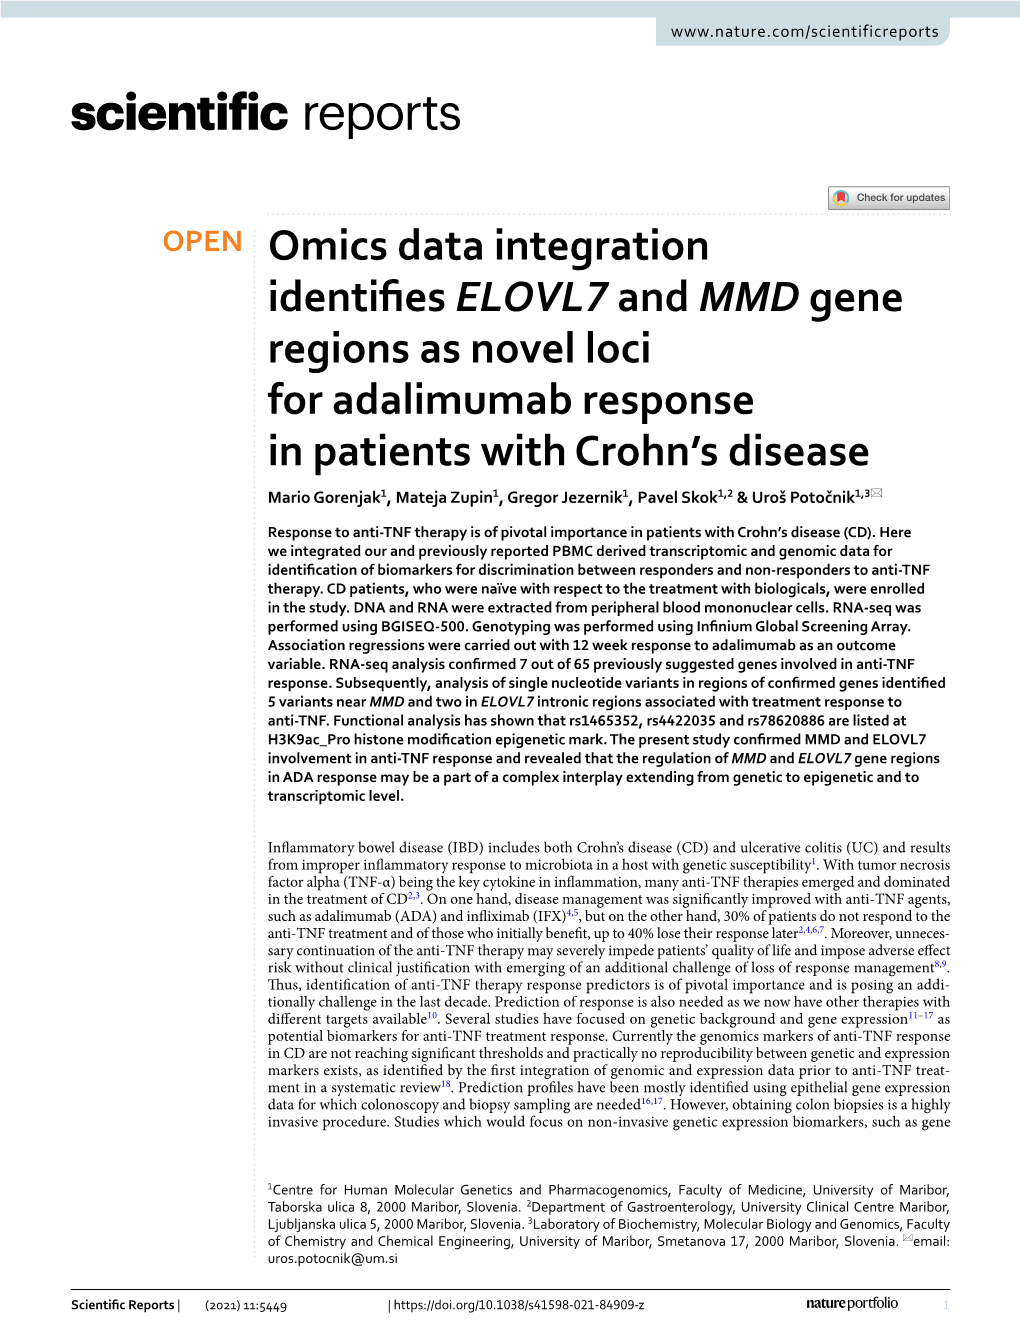 Omics Data Integration Identifies ELOVL7 and MMD Gene Regions As